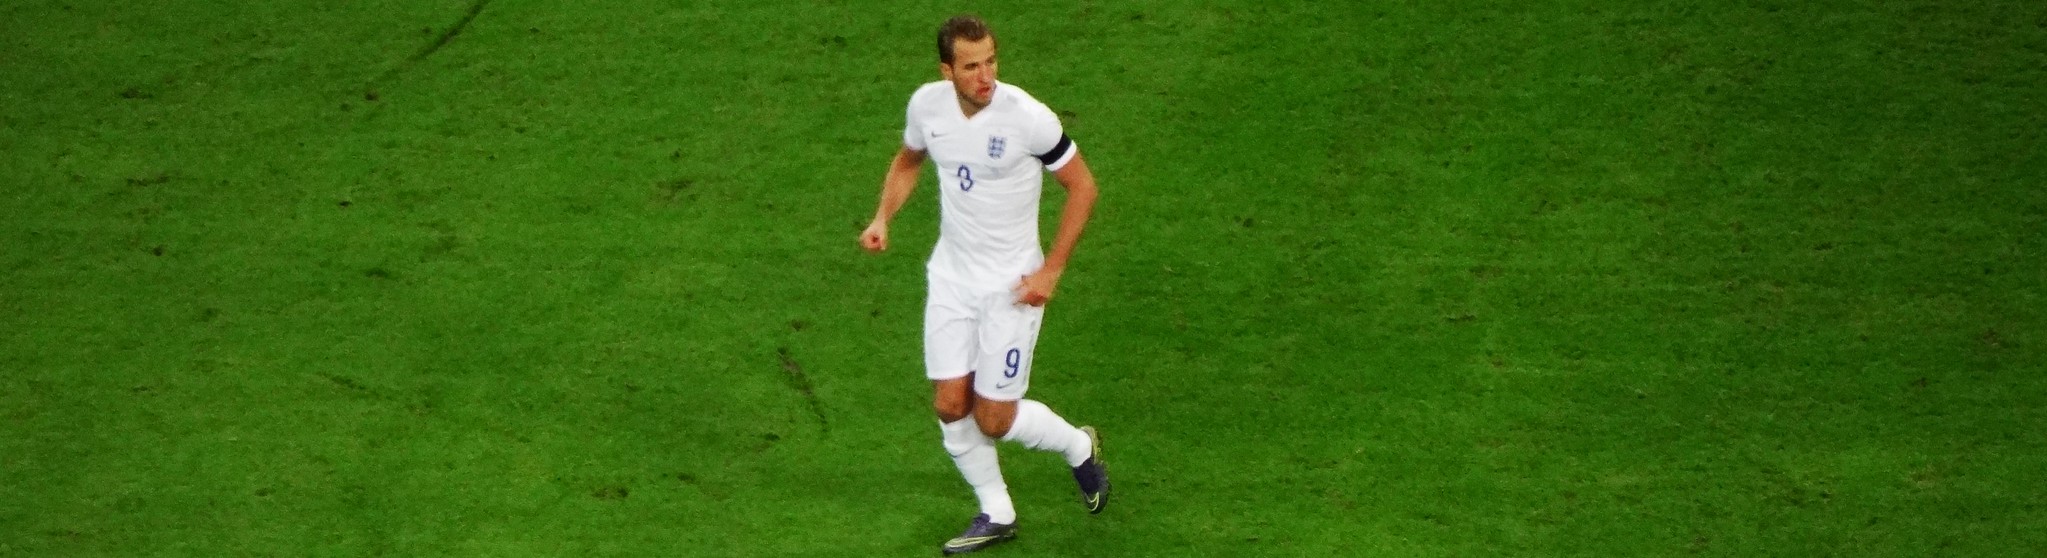 England striker Harry Kane